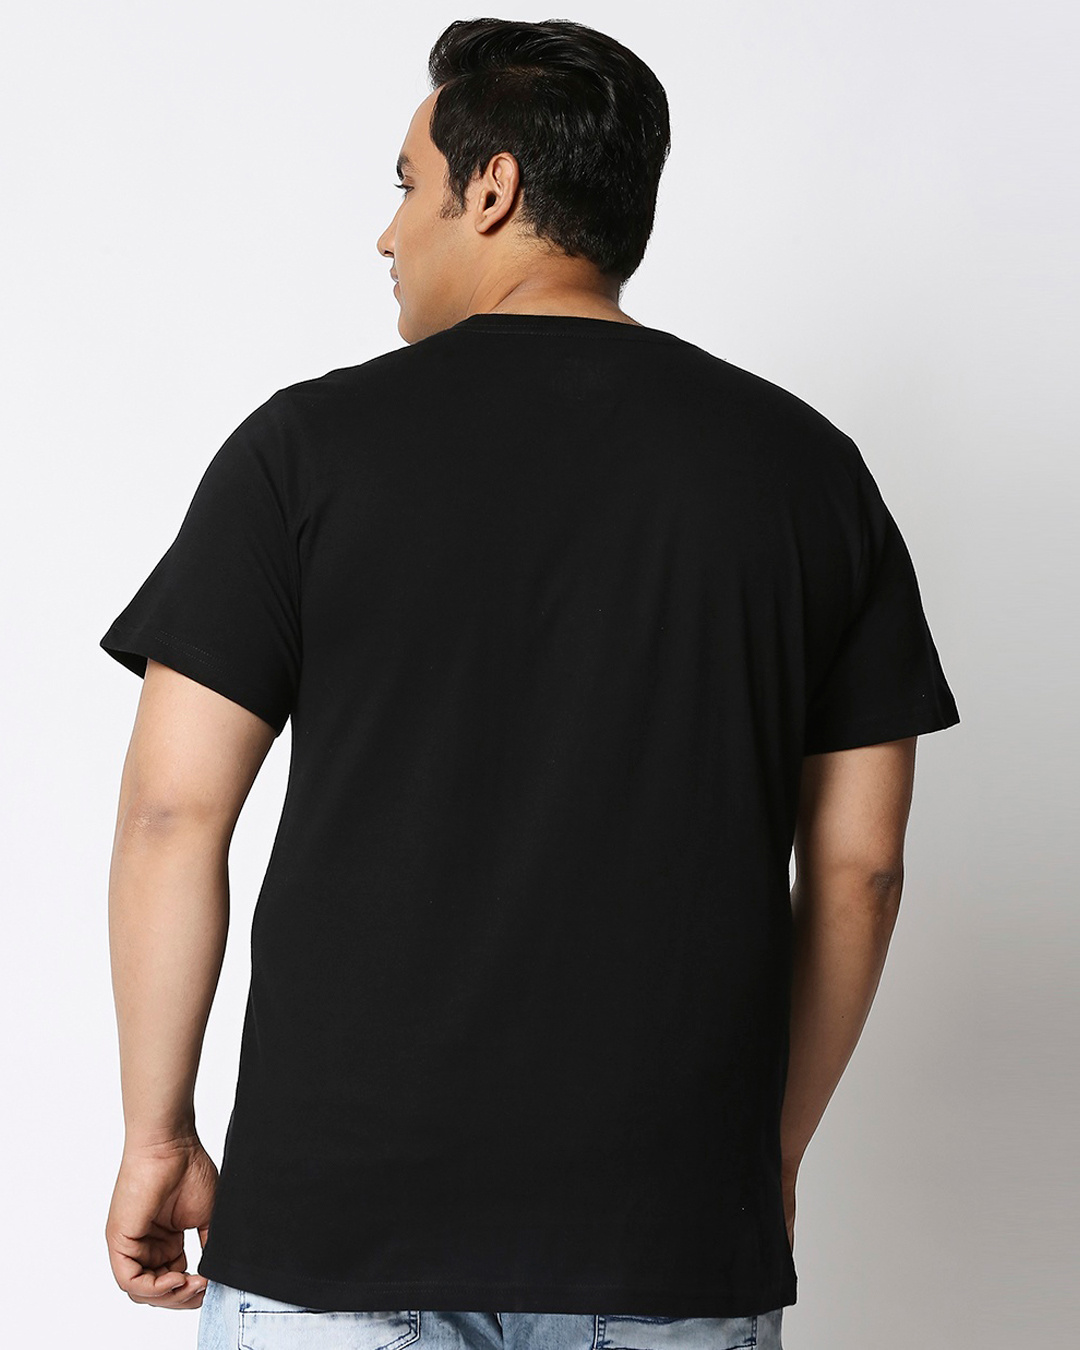 Shop Better Hero Men's Half Sleeves T-shirt Plus Size-Back